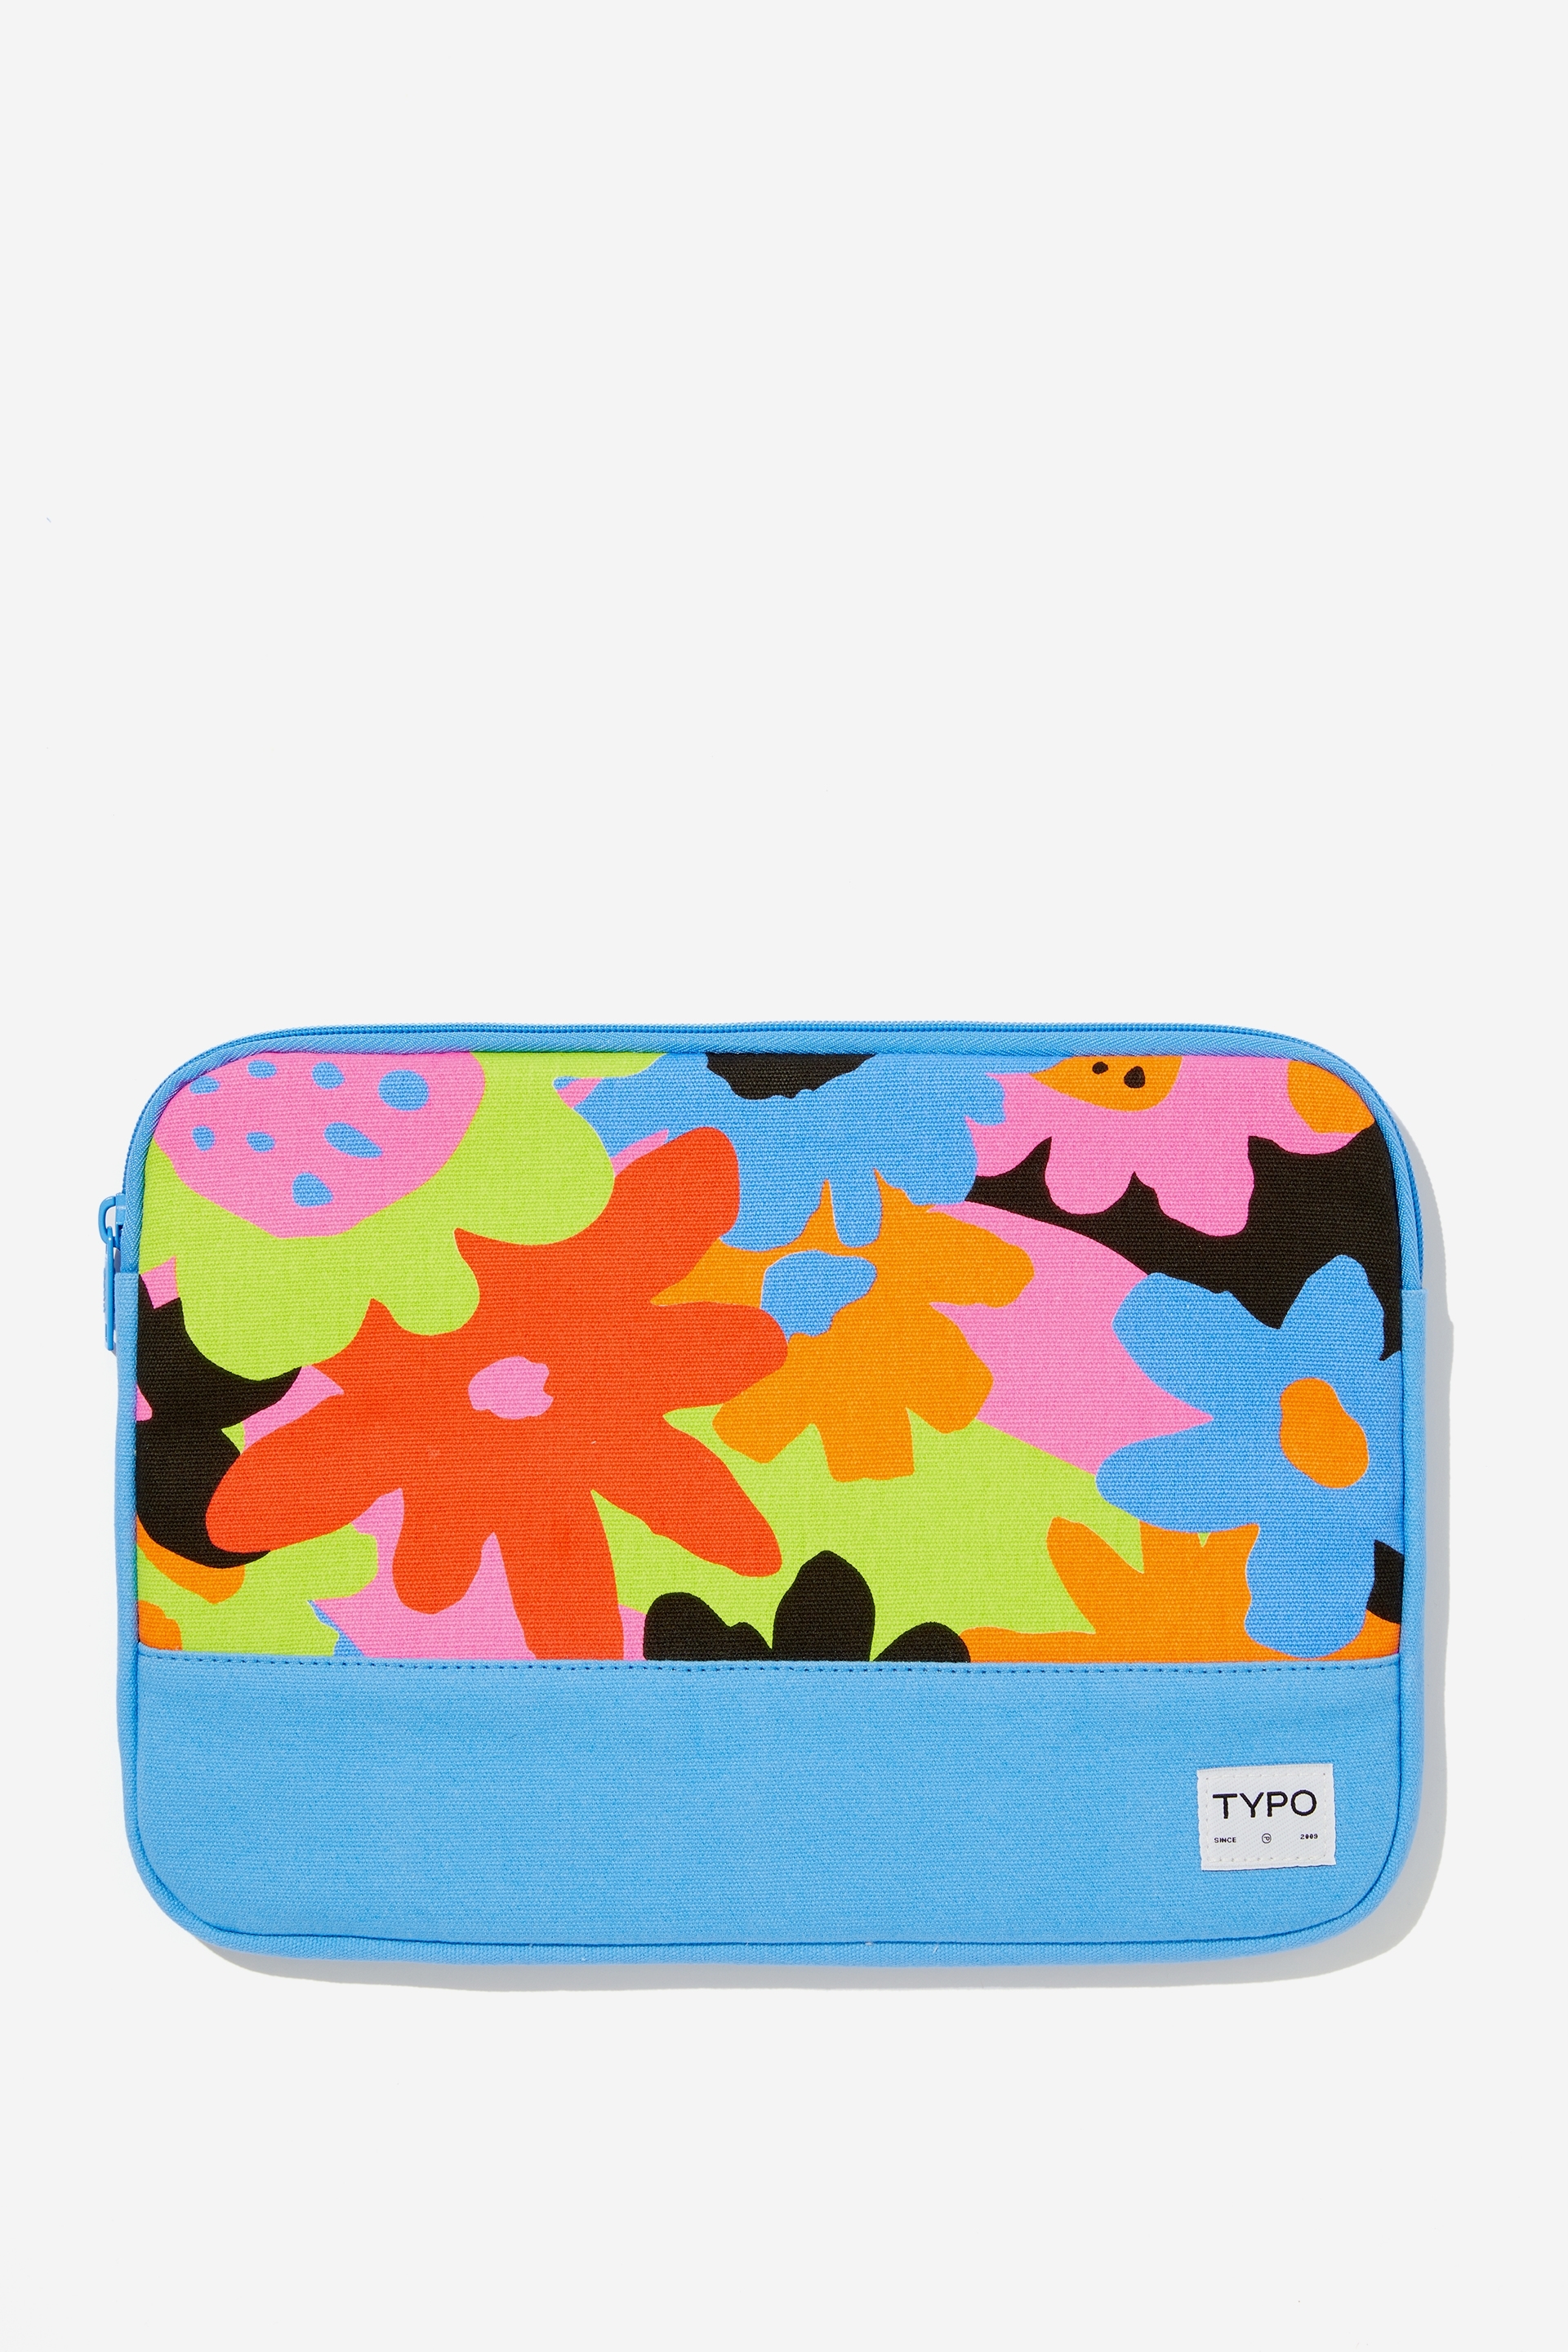 Typo - Take Me Away 13 Inch Laptop Case - Ezra overlap floral neon multi